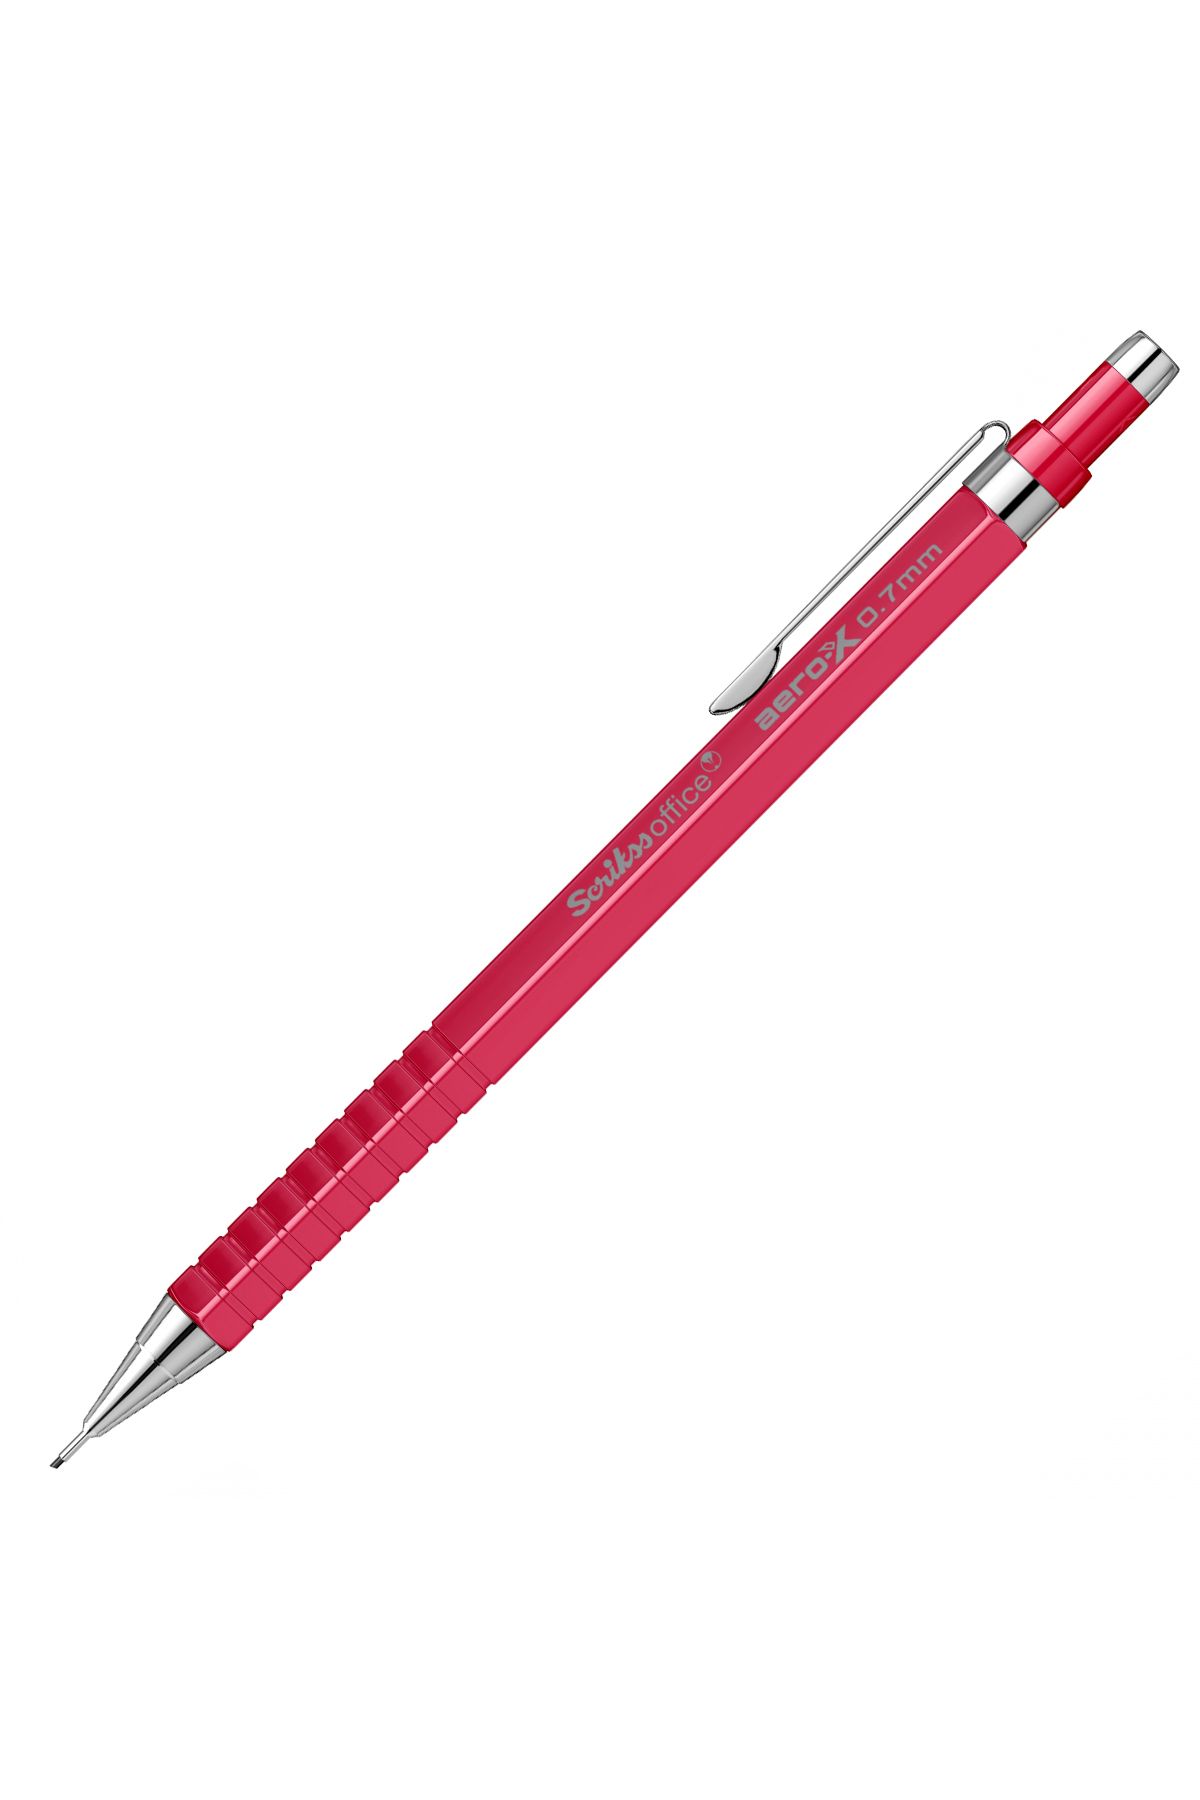 Scrikss Aero-X Mekanik Kurşun Kalem 0.7mm Kırmızı